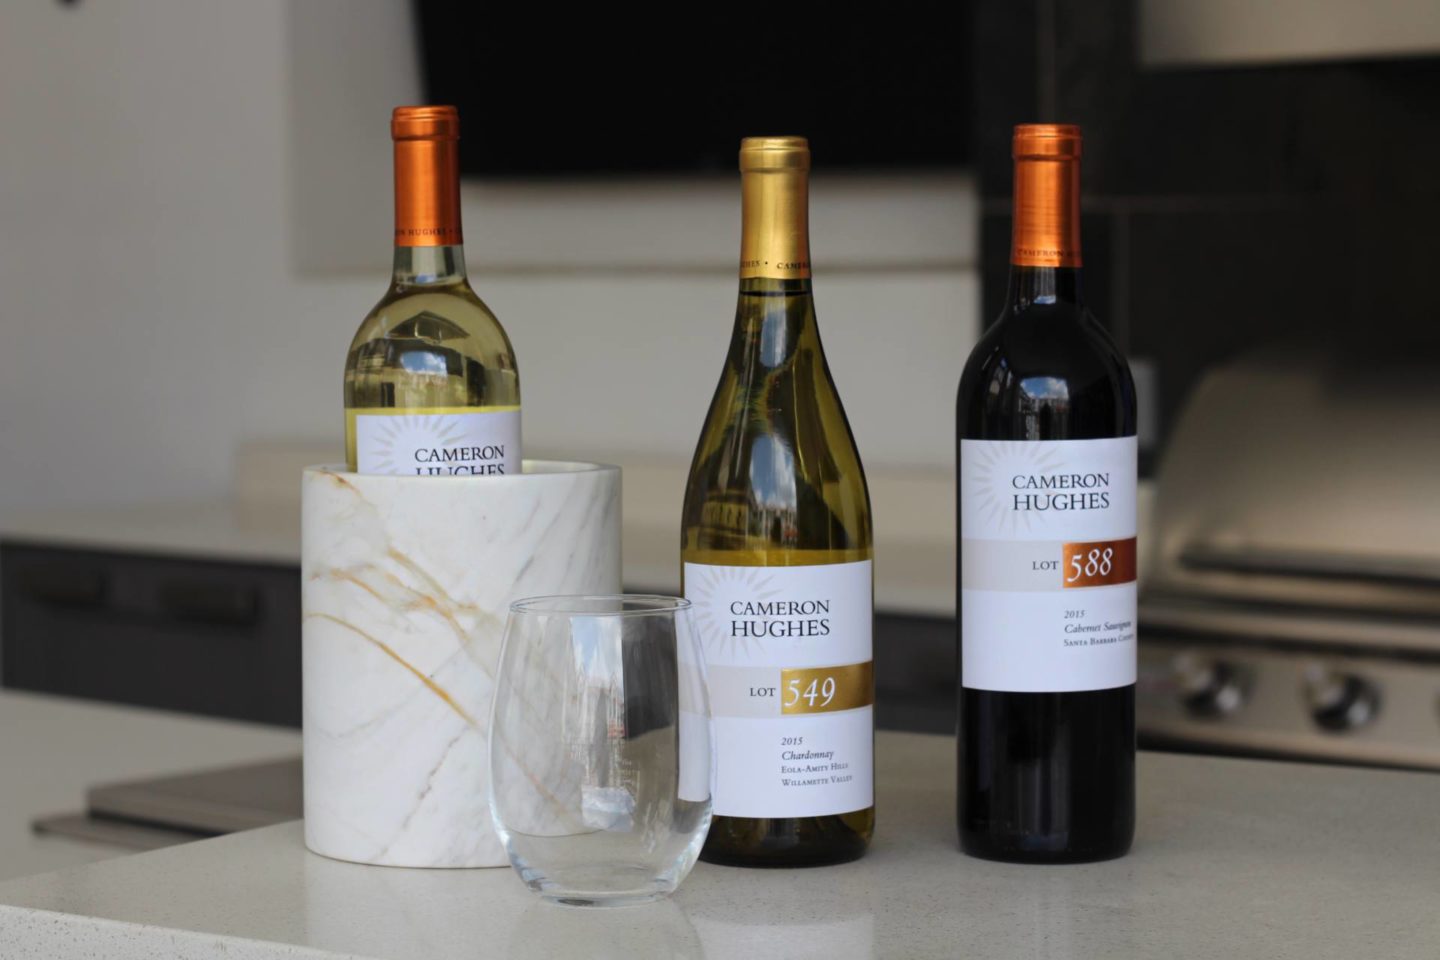 3 bottles of Cameron Hughes Wine Lot Series wines